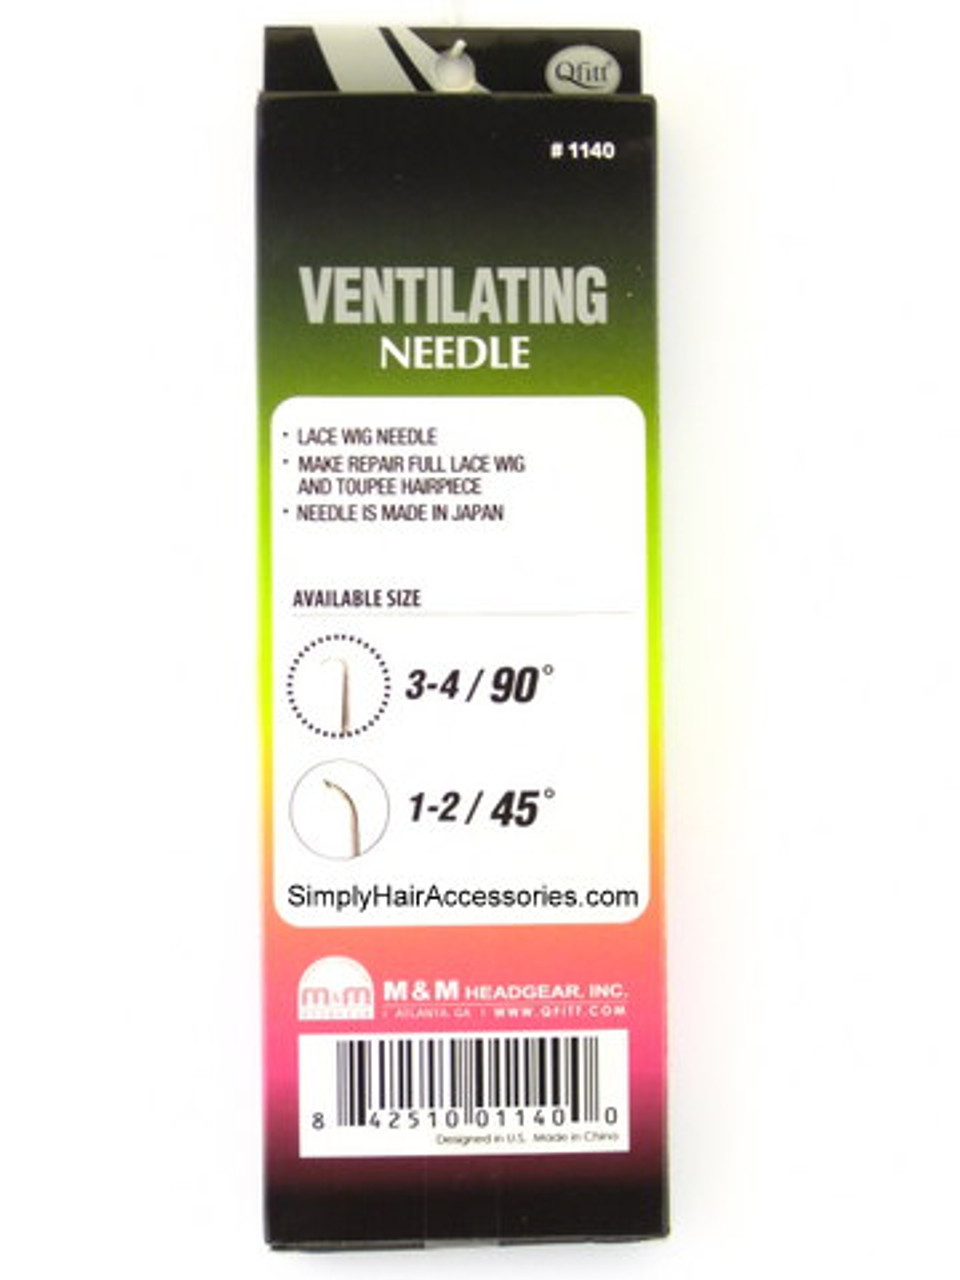 Qfitt Lace Wig Ventilating Needle Making/Repair DIY Tool - 1 Pc.